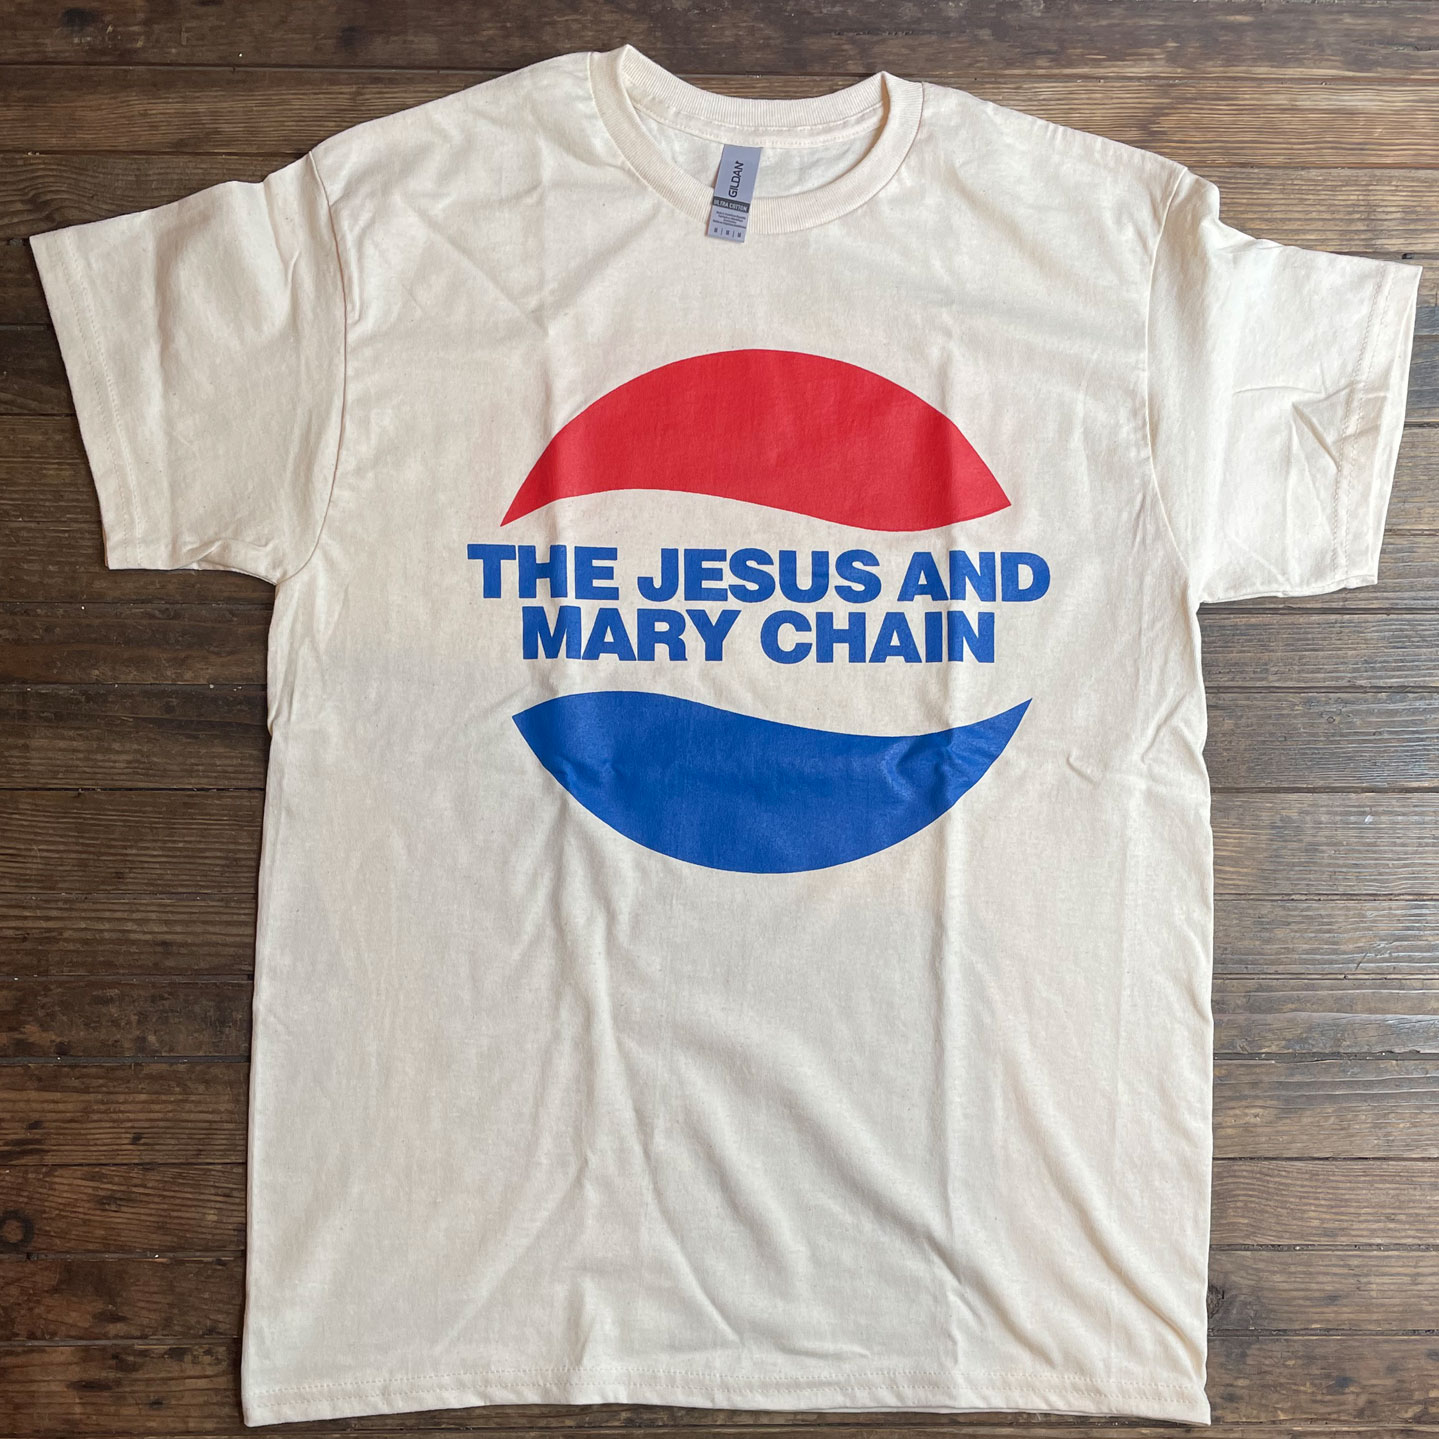 The Jesus and Mary Chain Tシャツ www.krzysztofbialy.com